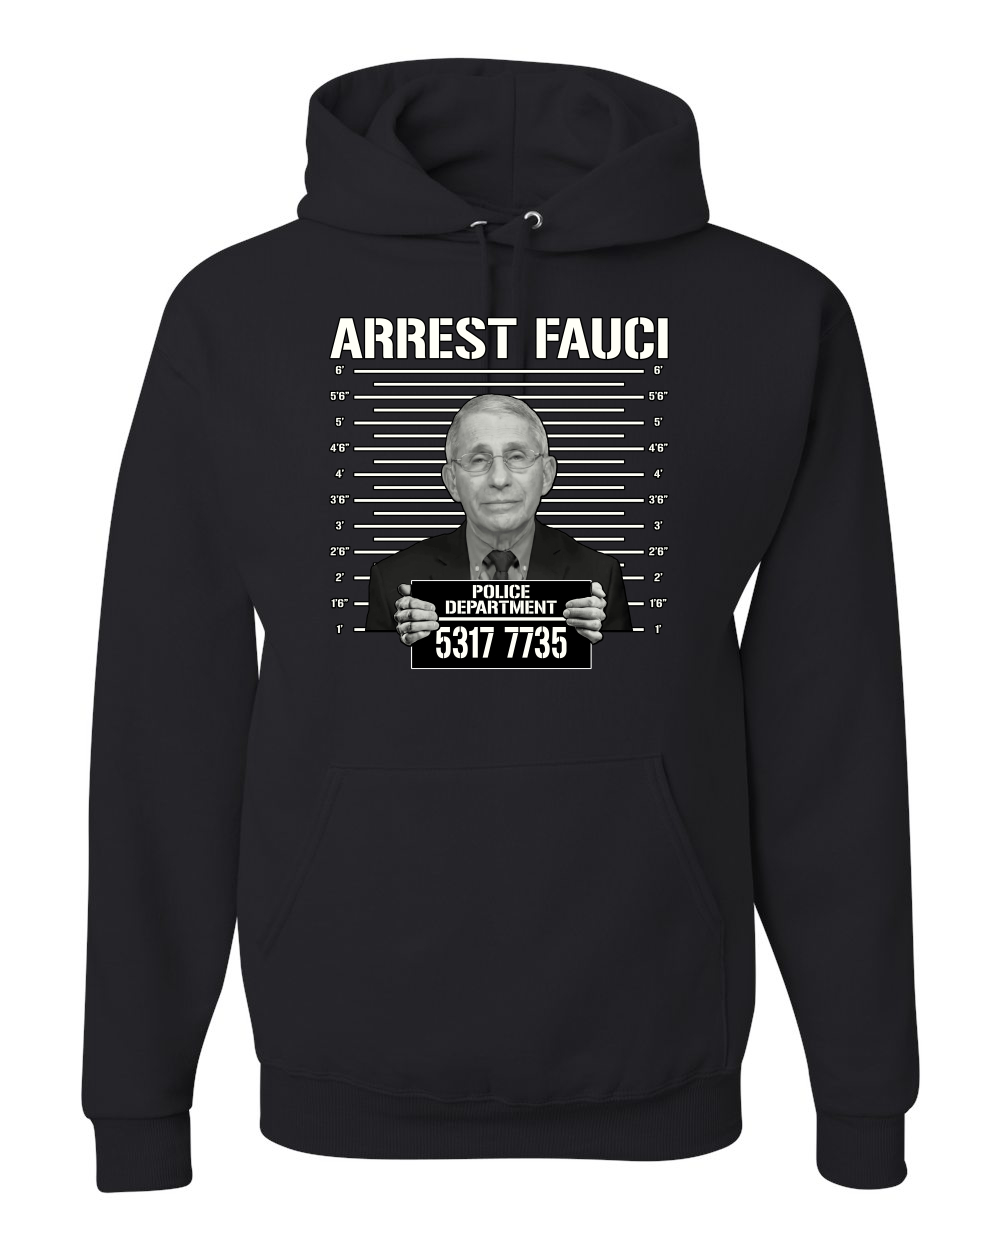 thumbnail 3  - Arrest Fauci Mugshot Political Unisex Graphic Hooded Sweatshirt